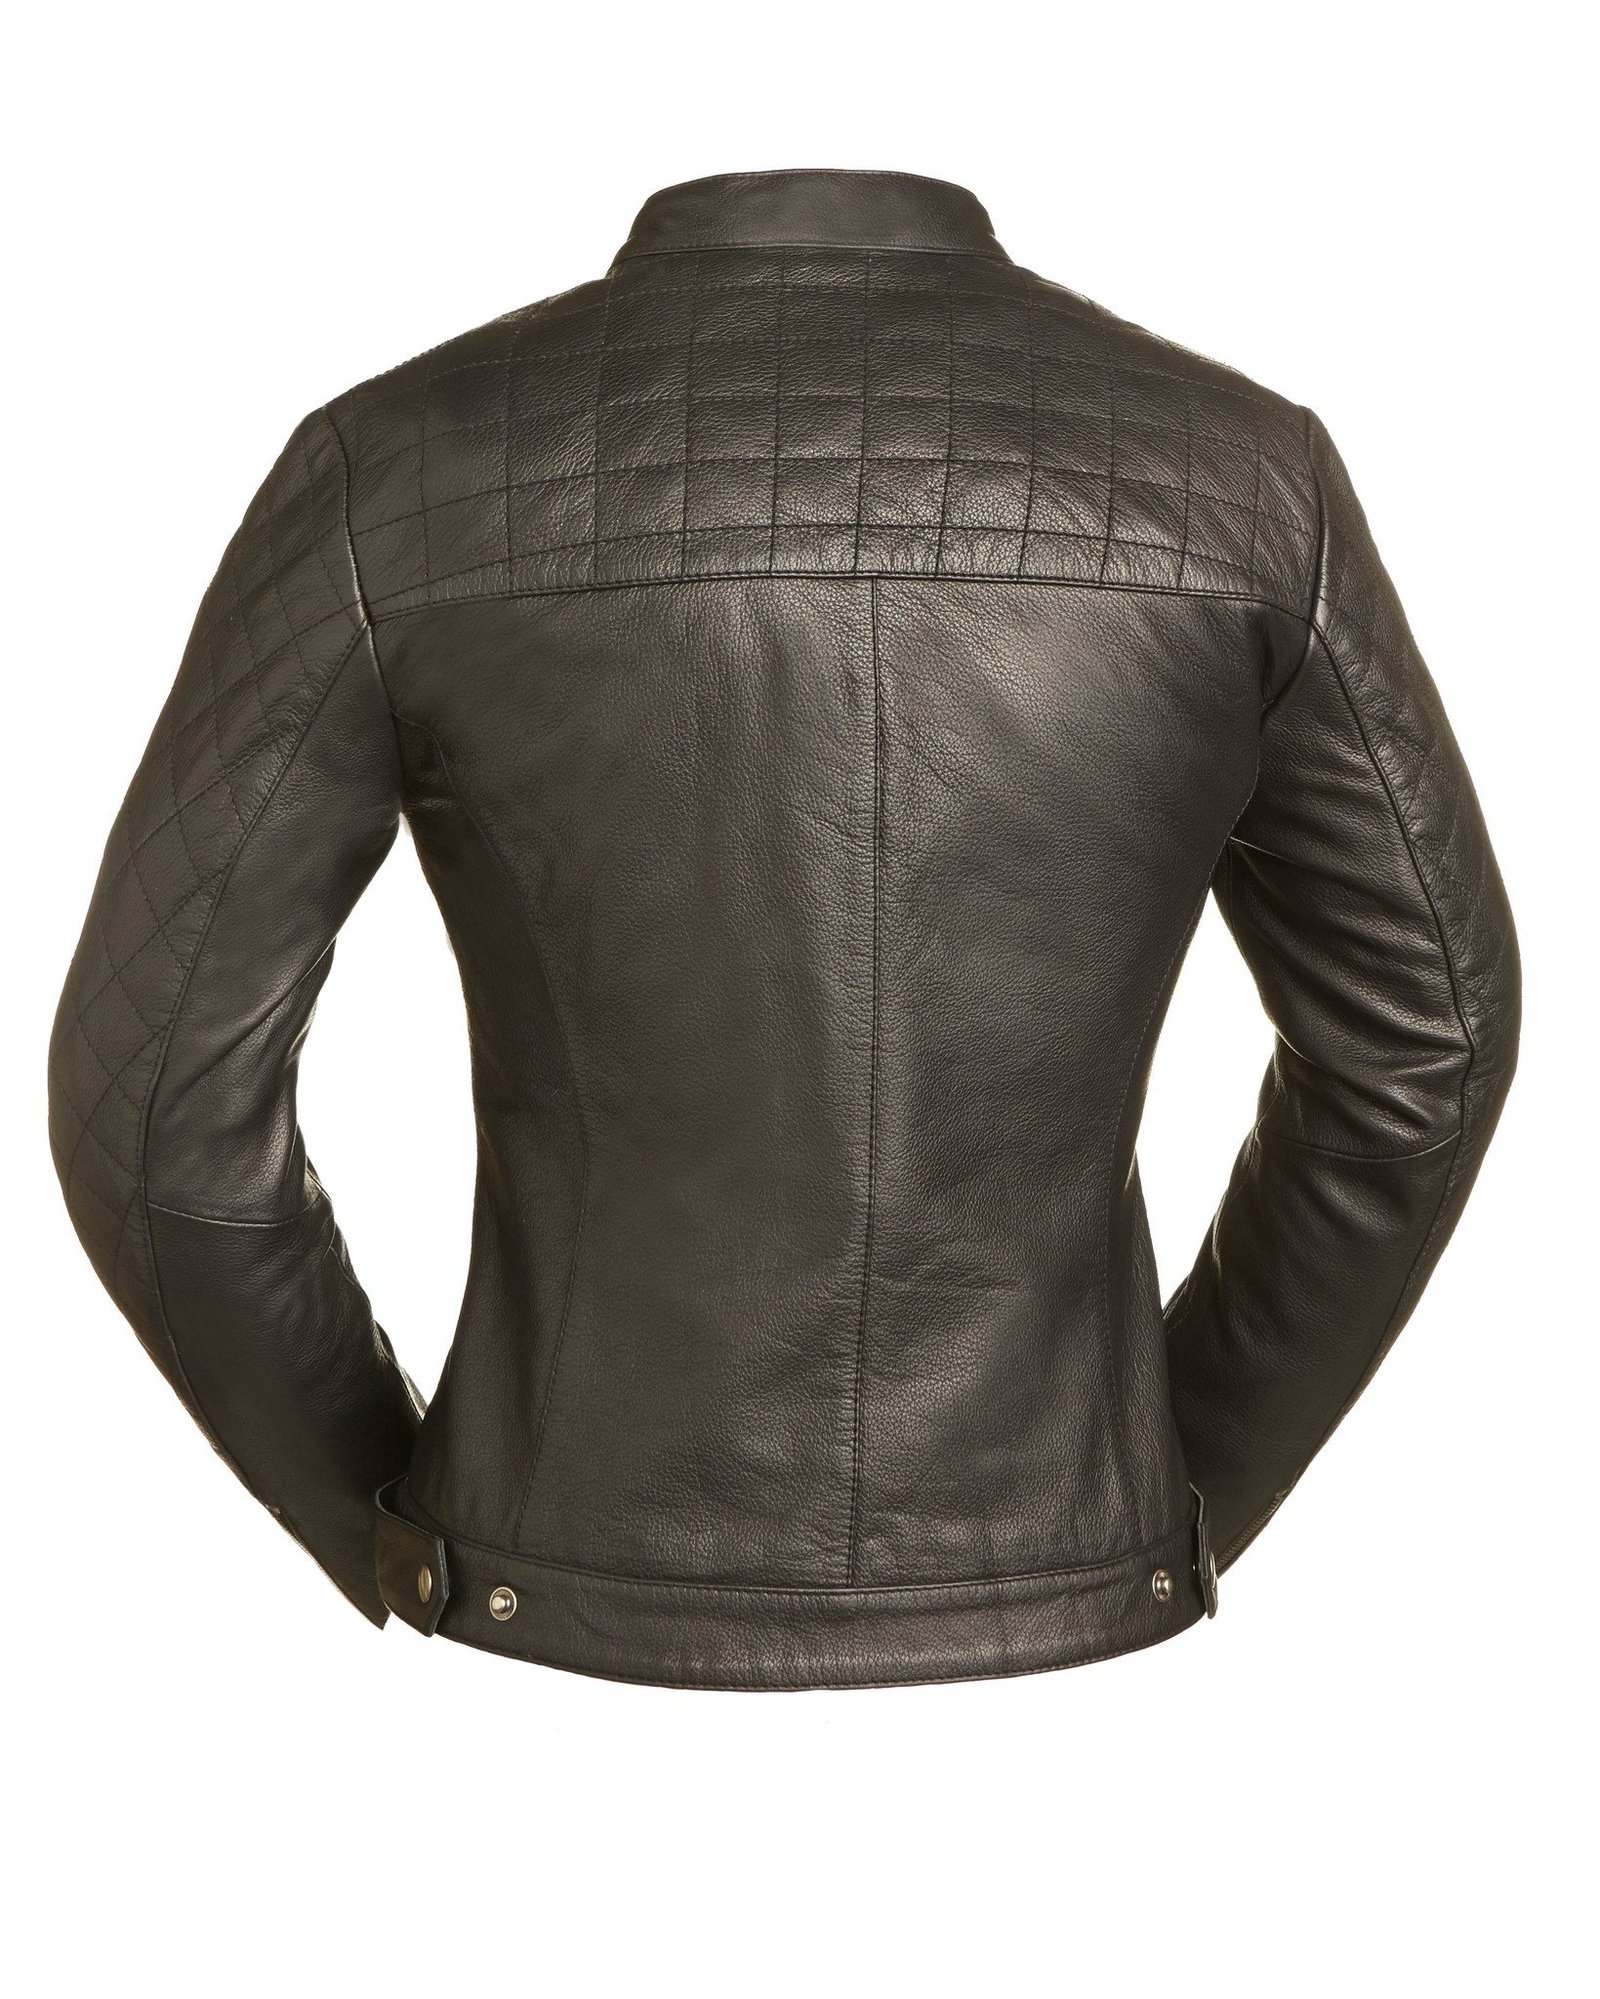 Black Diamonds - Women's Leather Motorcycle Jacket - FIL166CSLZ-FM